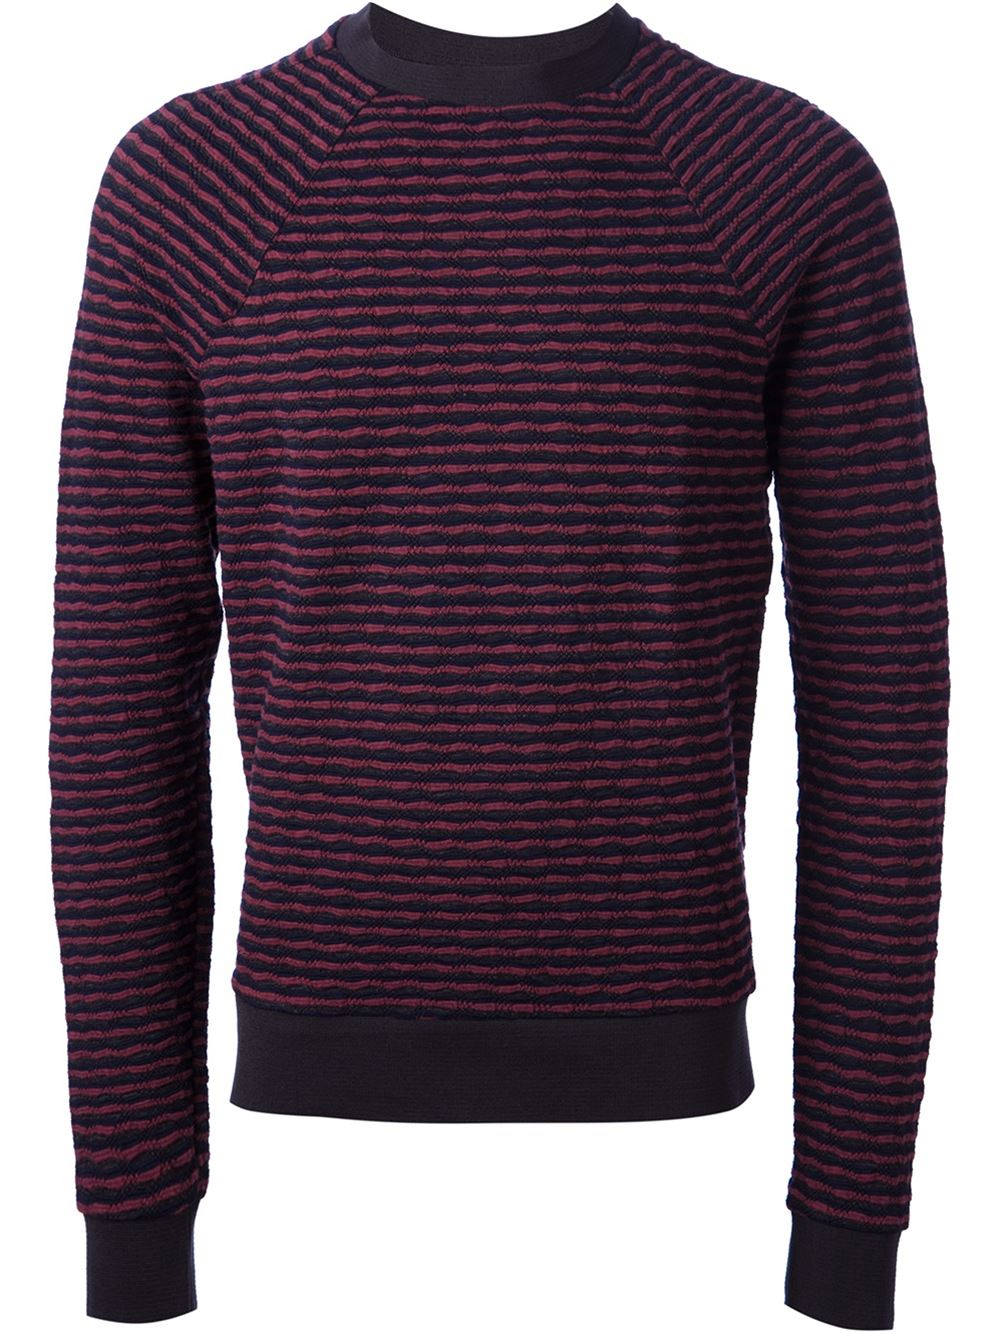 Paul smith Striped Crew Neck Sweater in Purple for Men (pink & purple ...